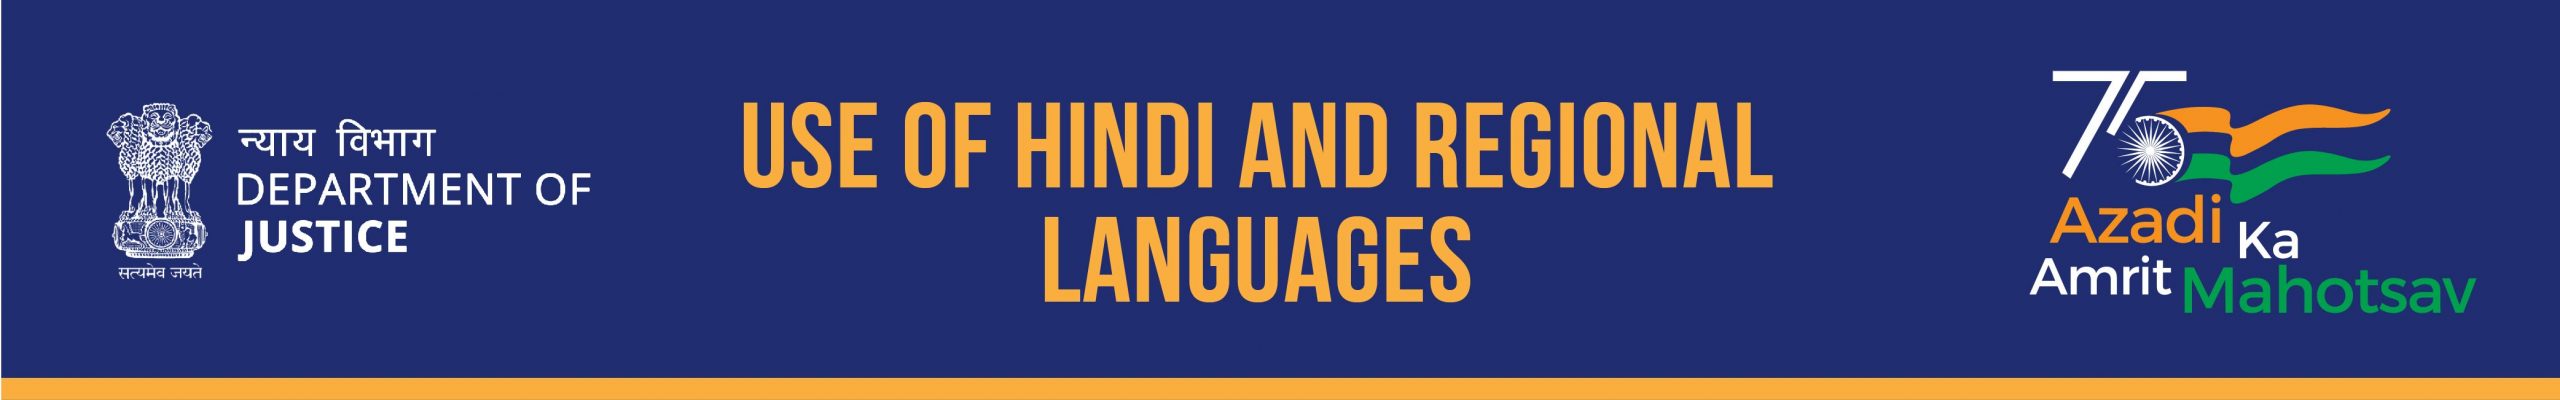 Use of Hindi and regional languages